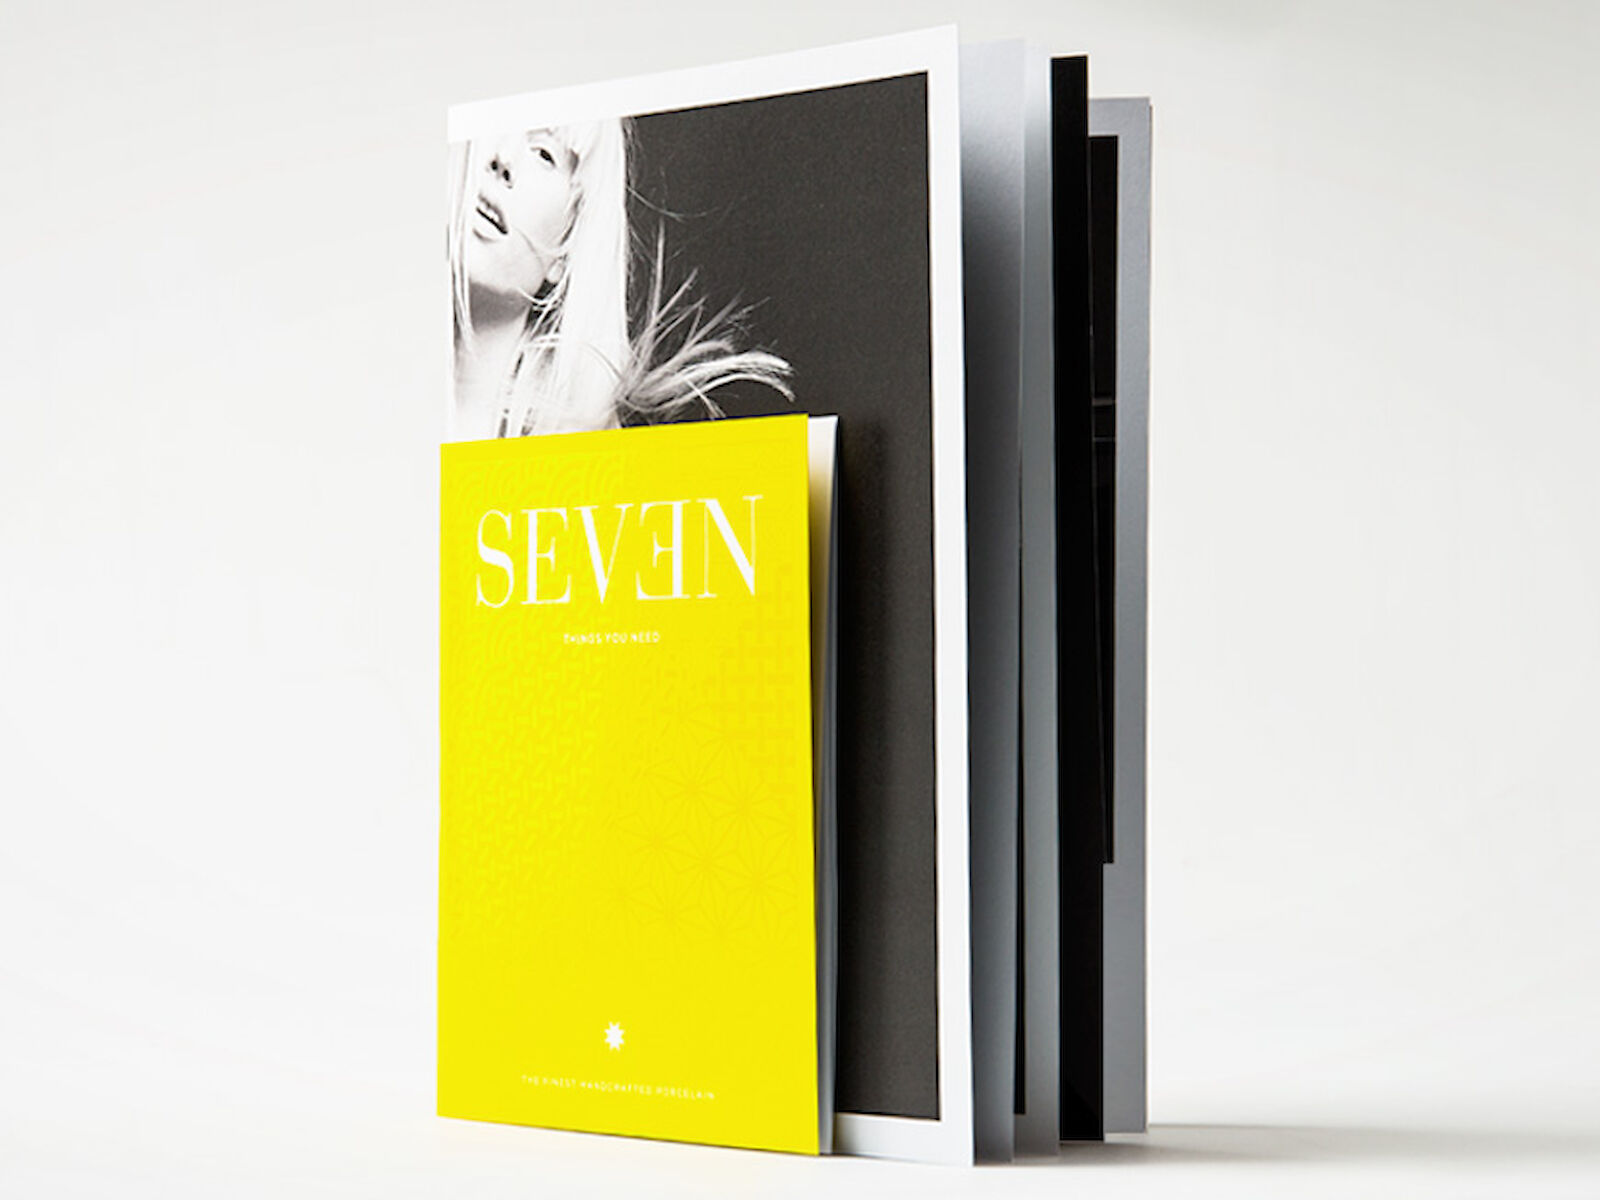 Design and brand concept for SEVEN from Sieger by Fürstenberg